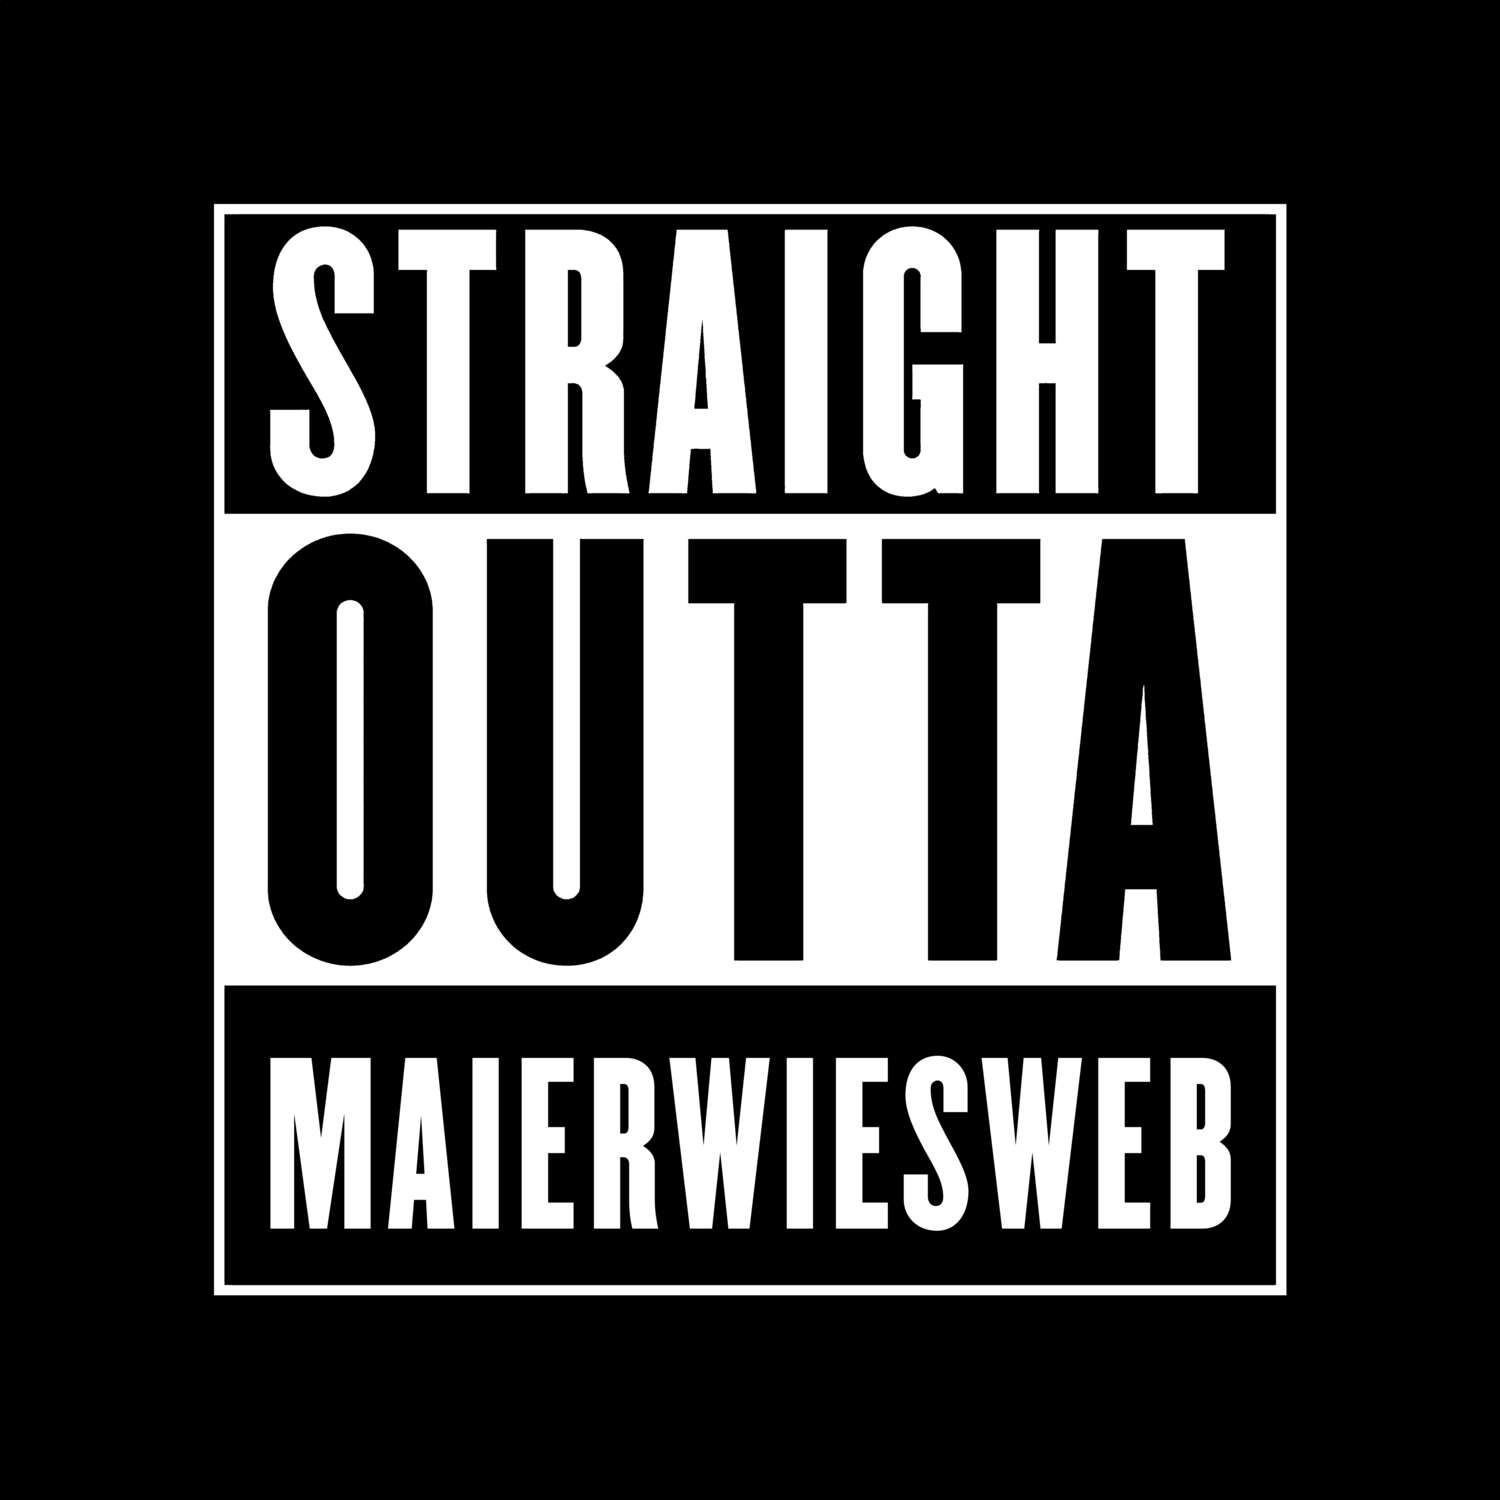 Maierwiesweb T-Shirt »Straight Outta«